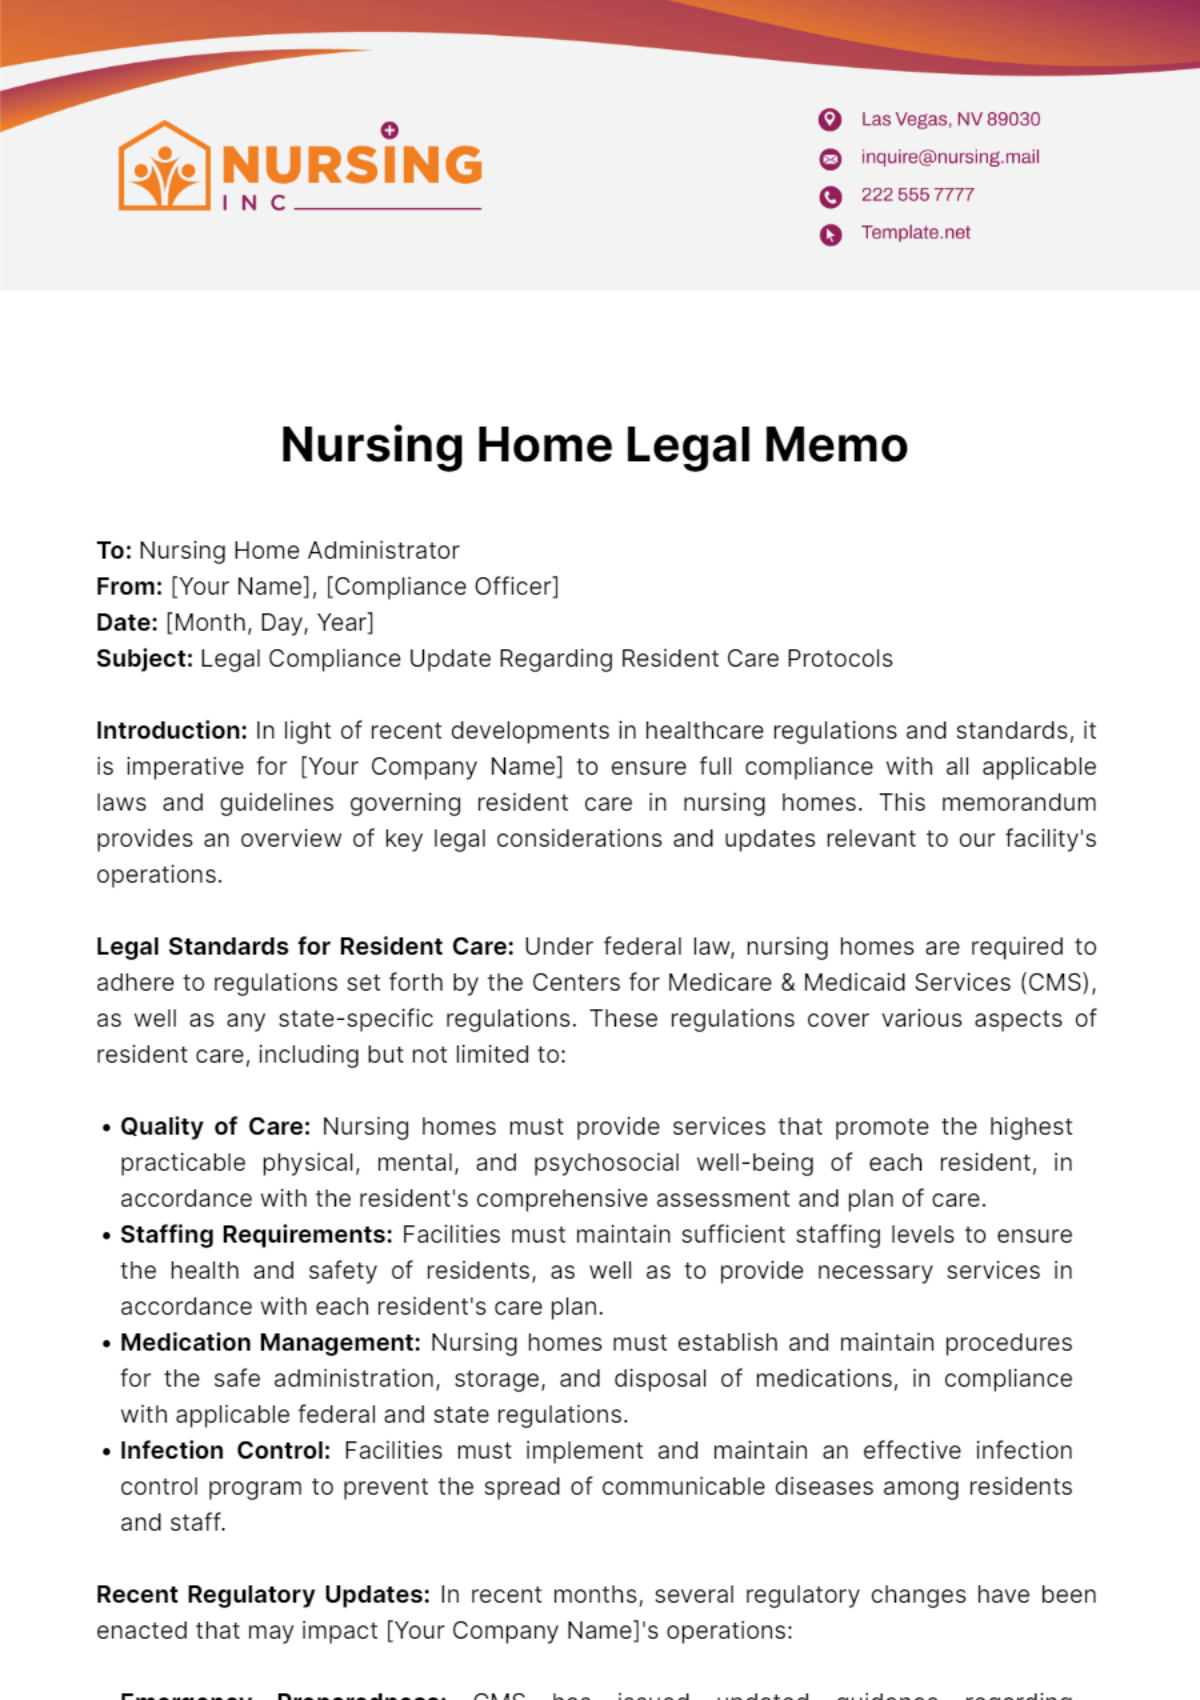 Nursing Home Legal Memo Template